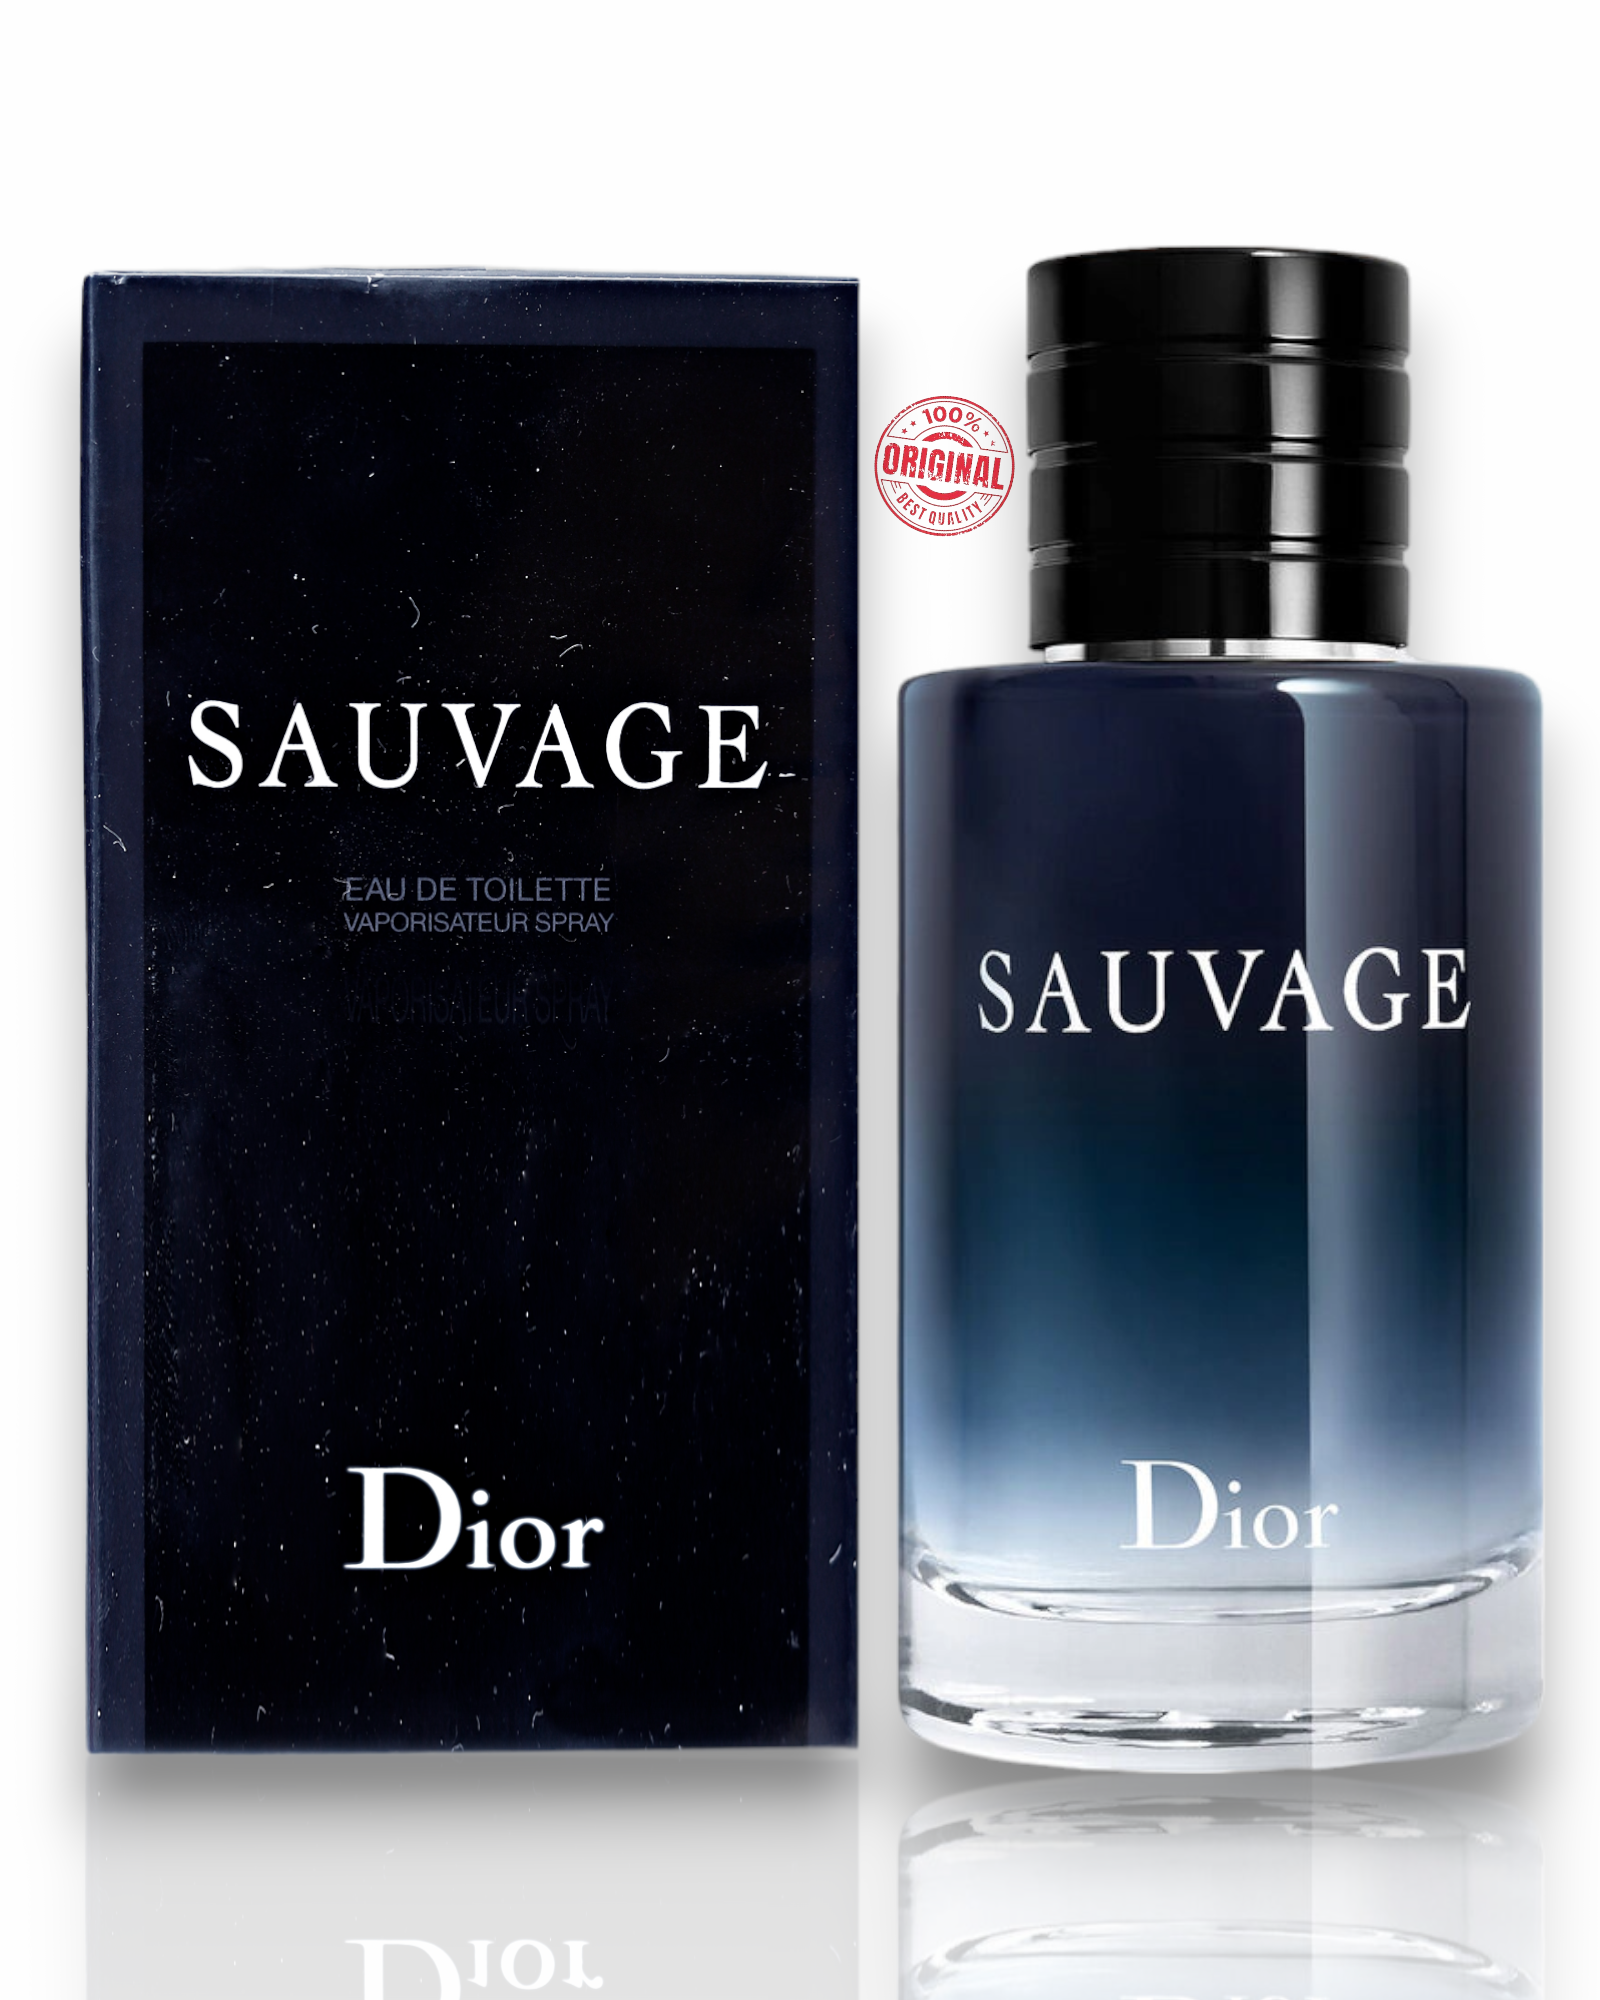 Discover Dior Sauvage Eau de Toilette 100ml: A Signature Scent for the Modern Man